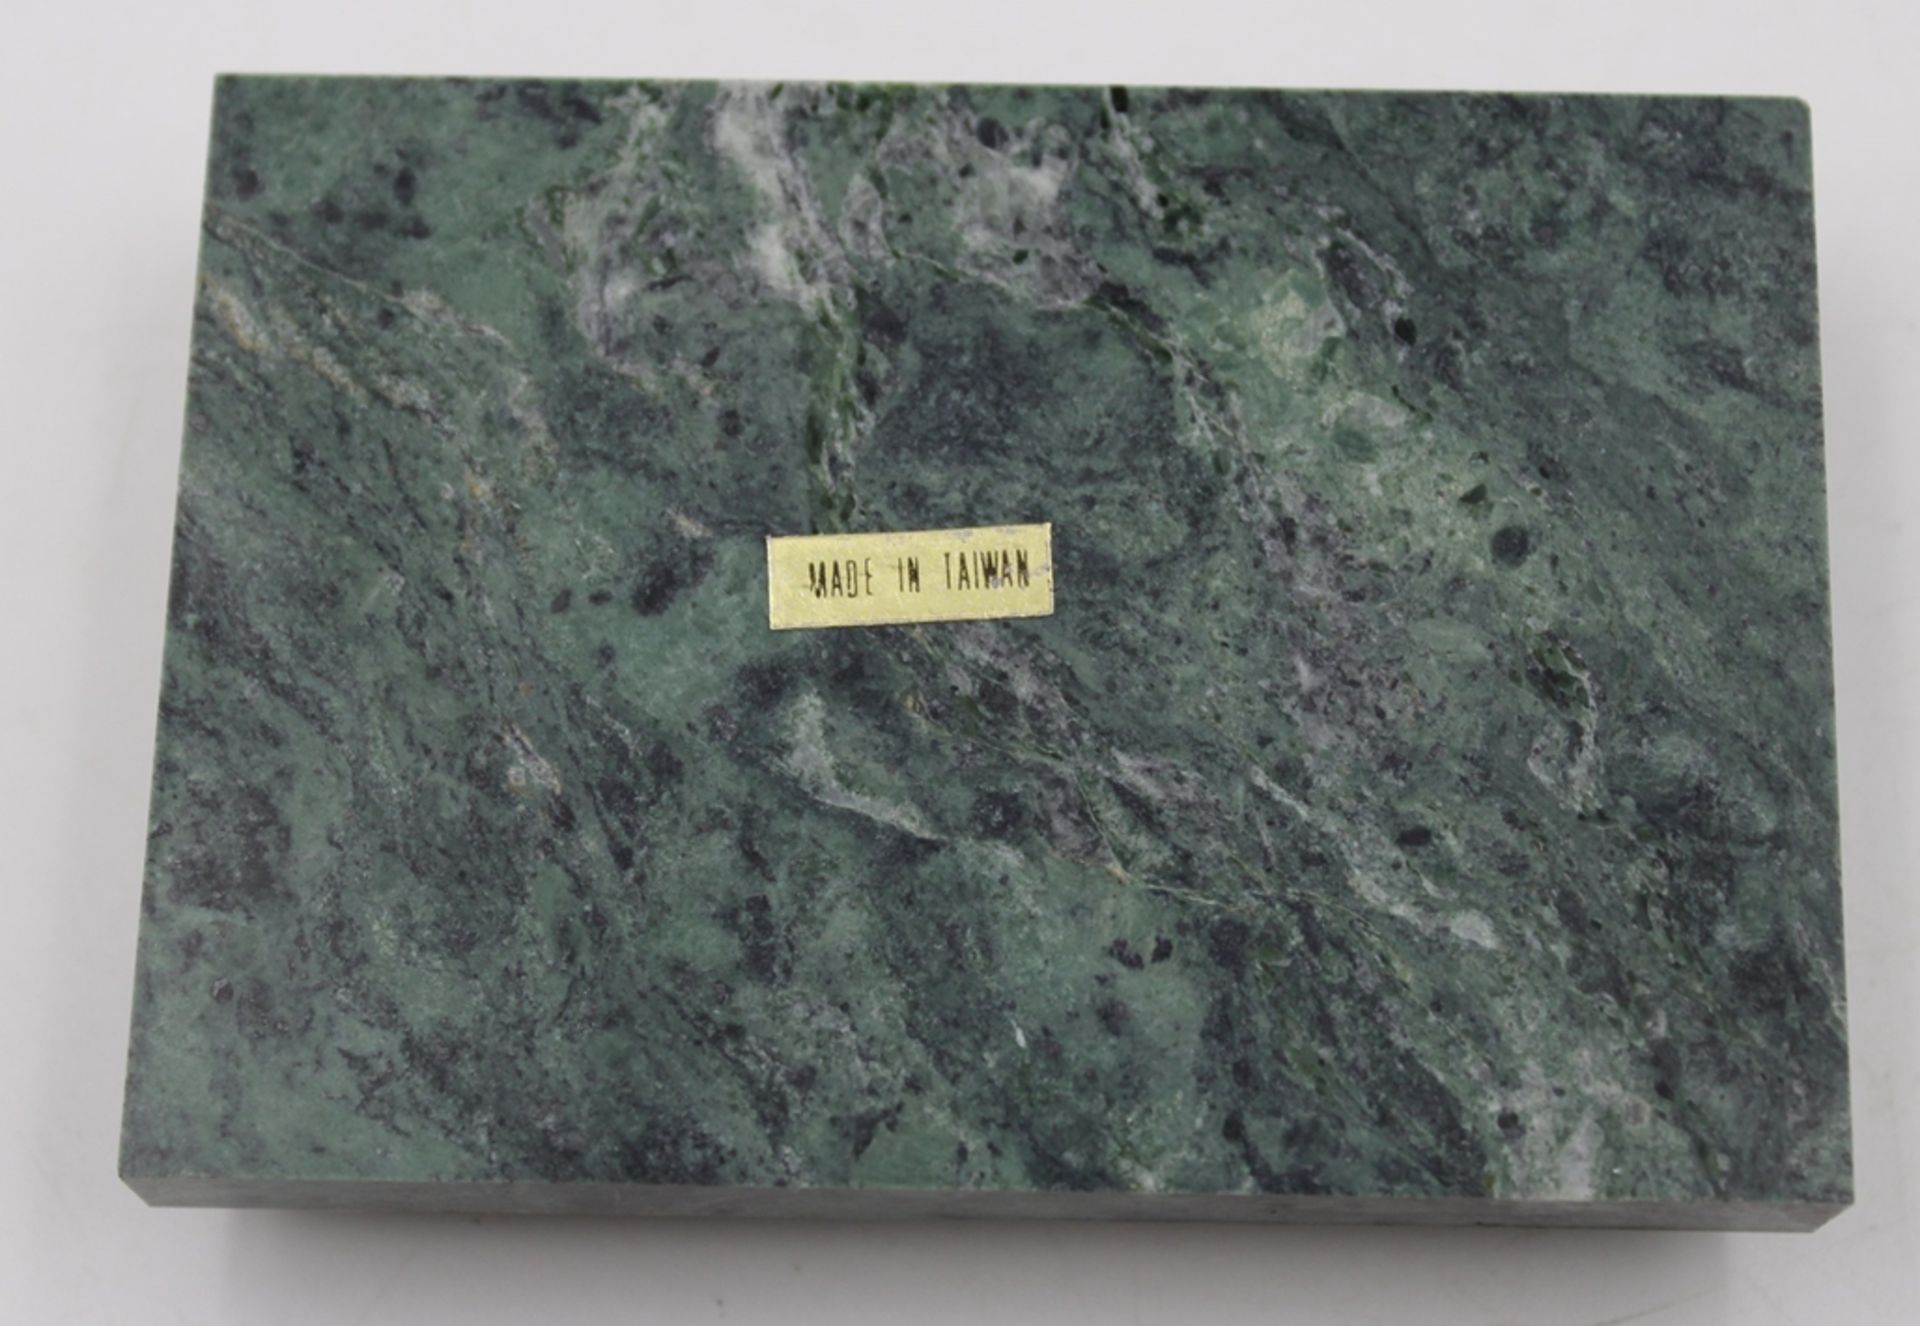 kl. Abakus, qohl Messing auf Stein, China. ca. 6 x 9,5cm. - Bild 2 aus 2